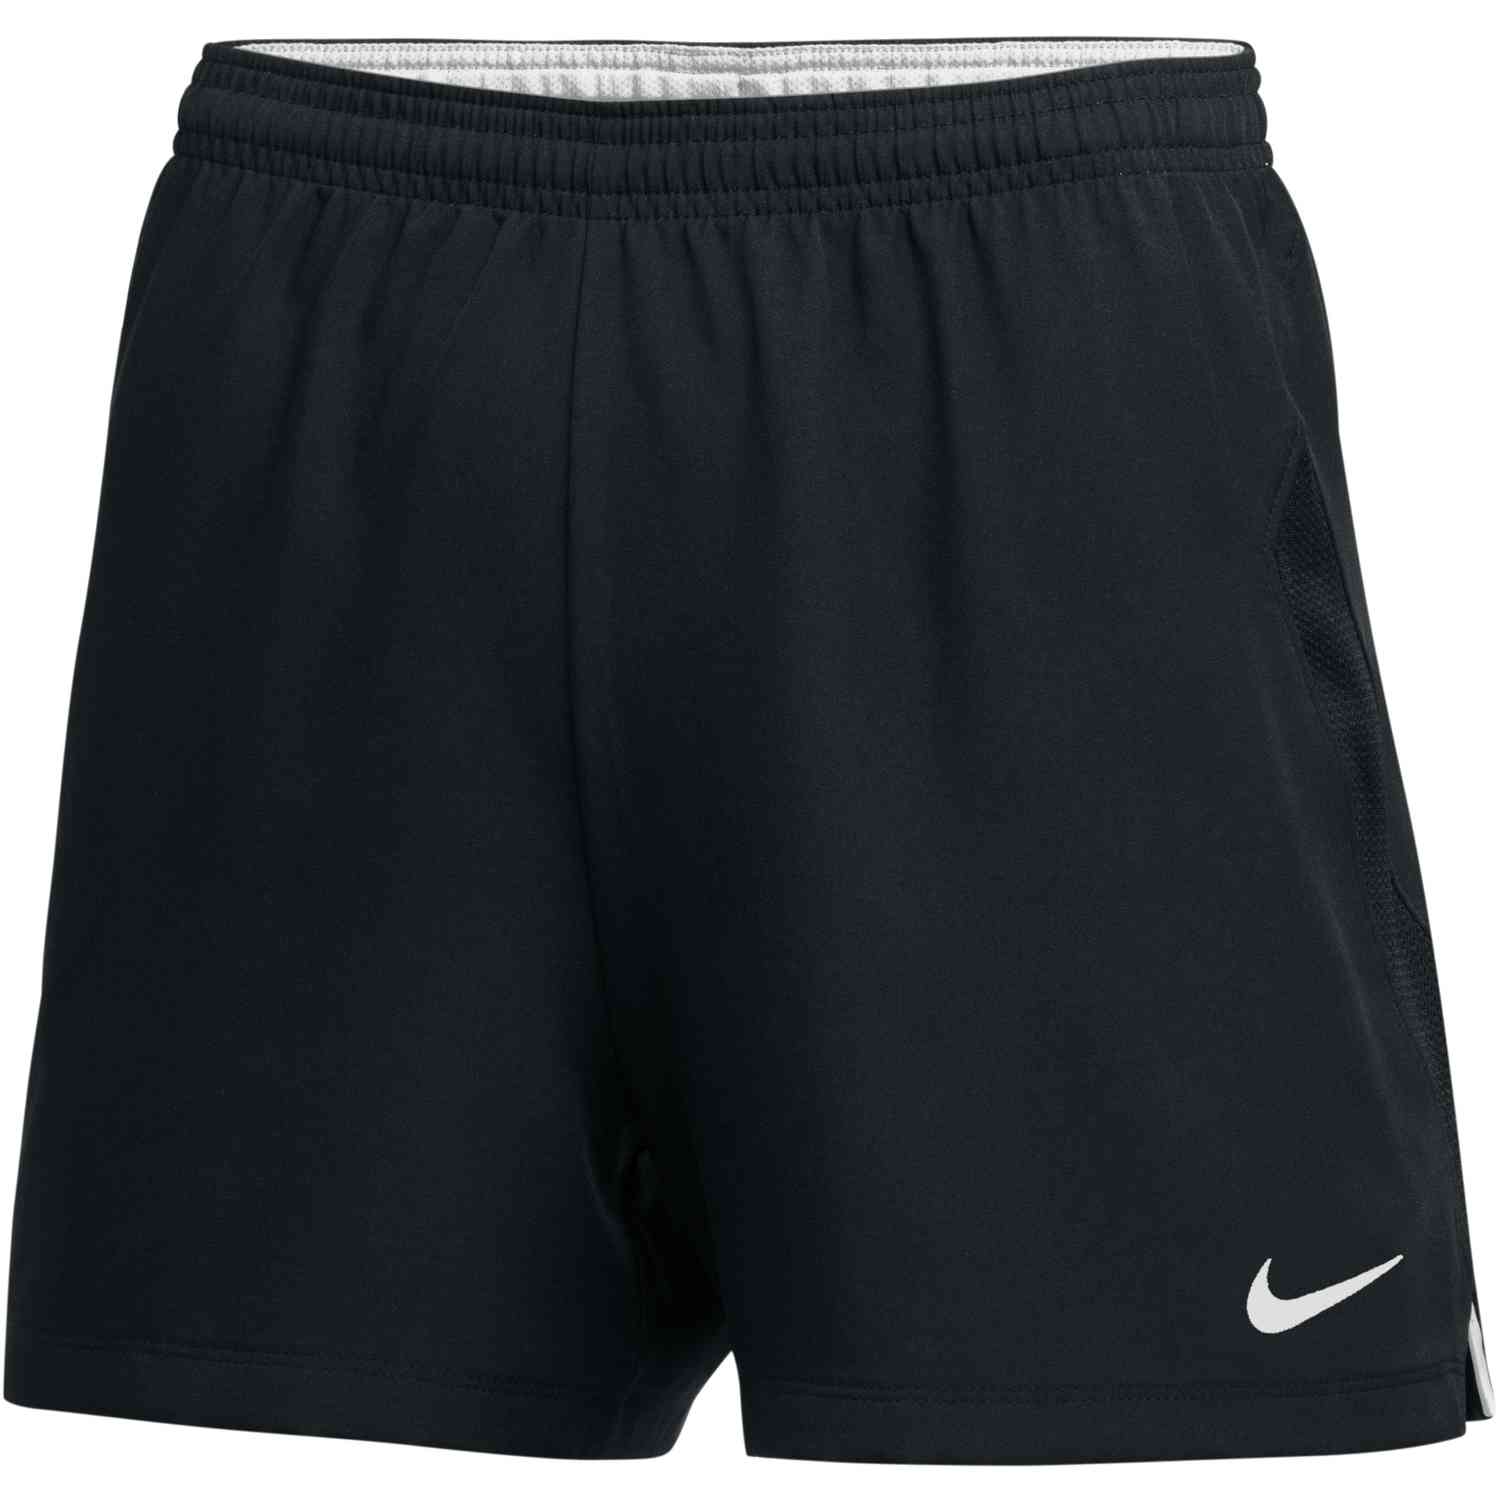 nike women's soccer shorts